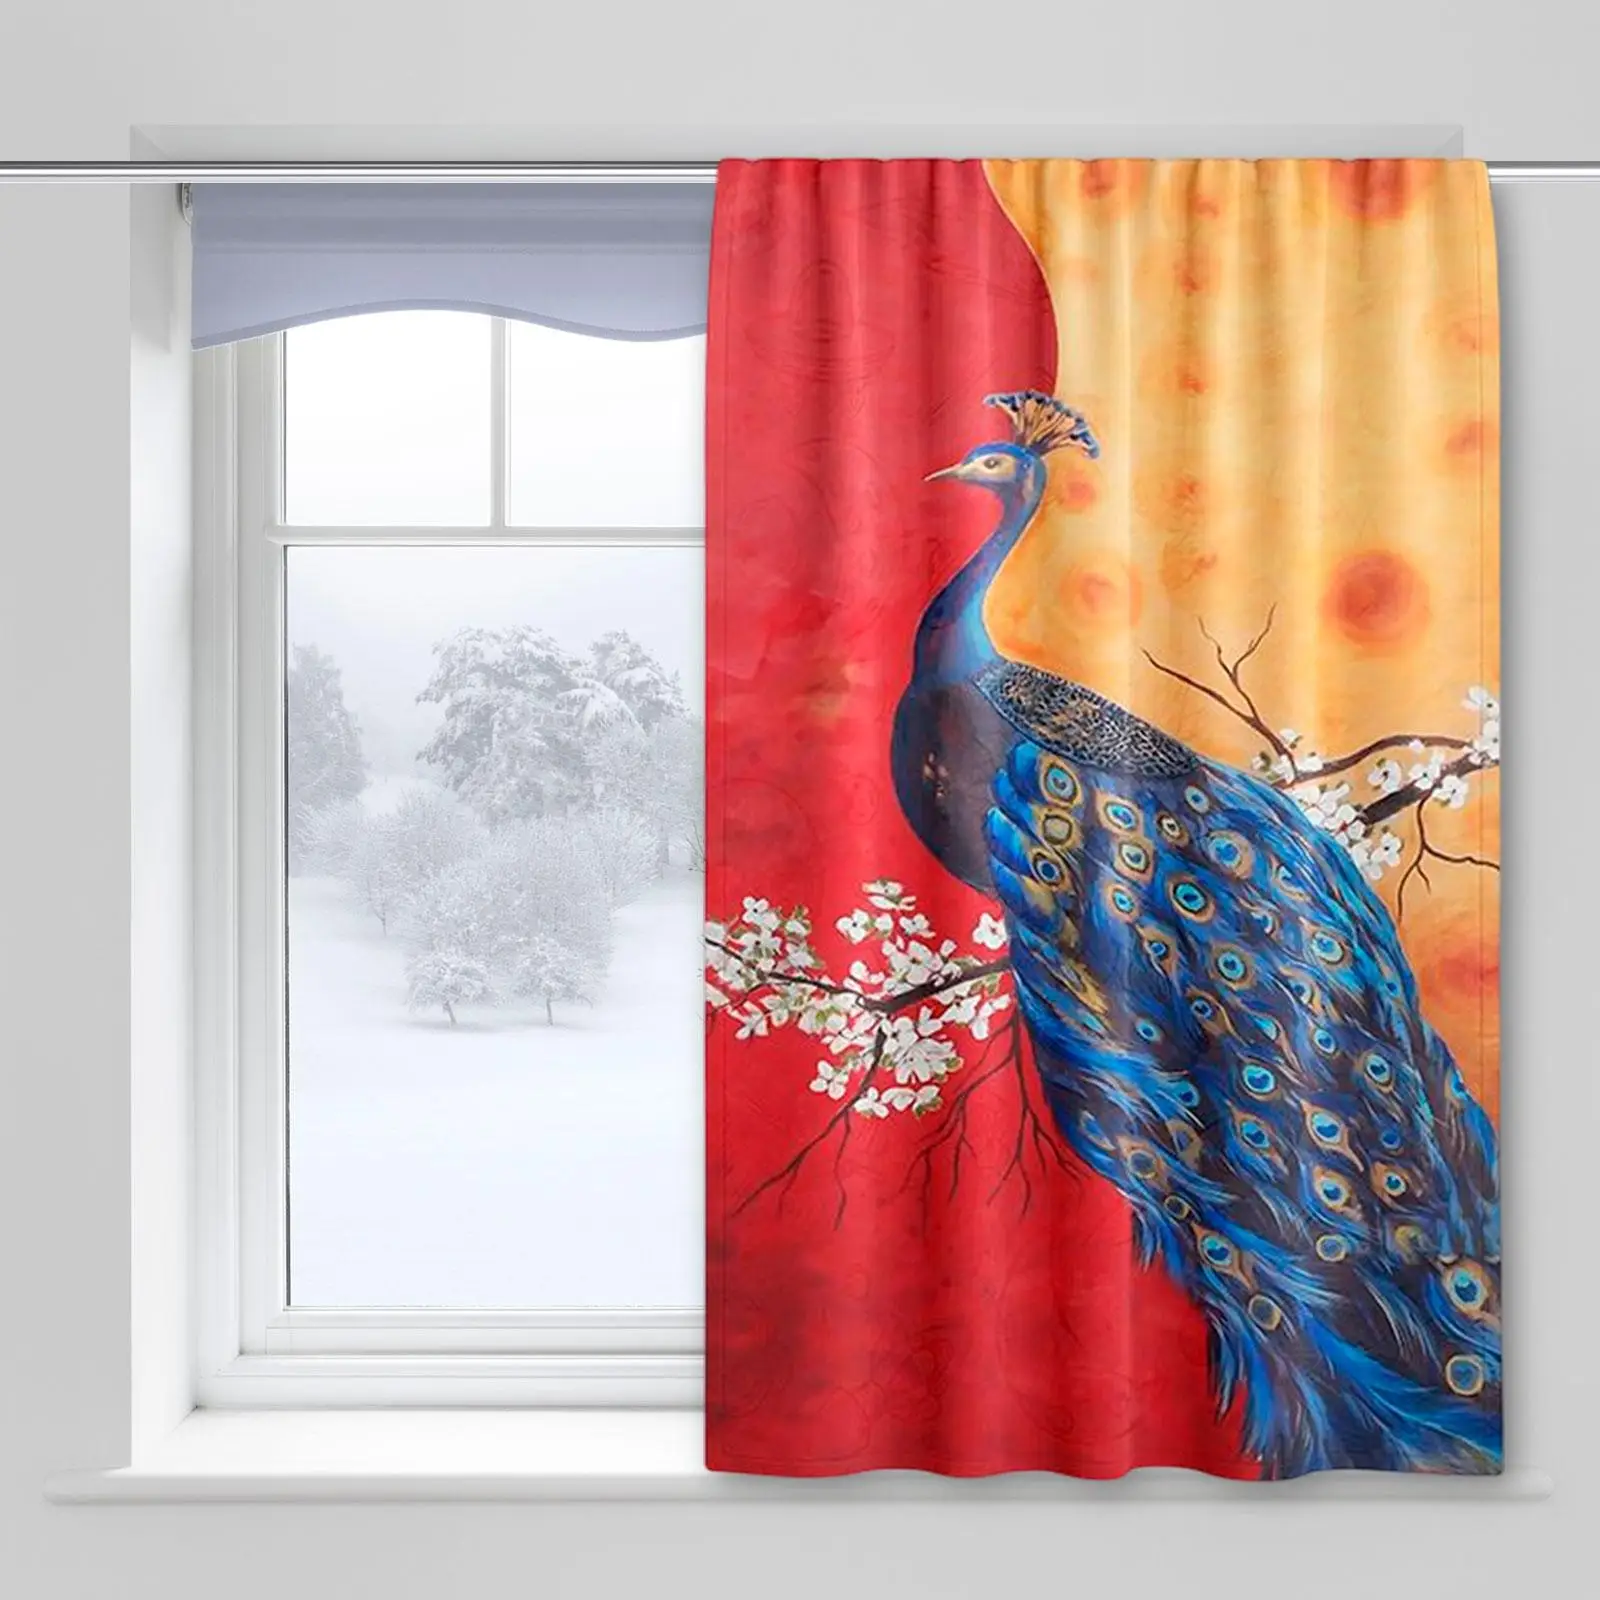 Peacock Print Curtain Panels Room Darkening Window Curtains for Bathroom 51.97`` W x 83.86`` L, Soft and Lighweight